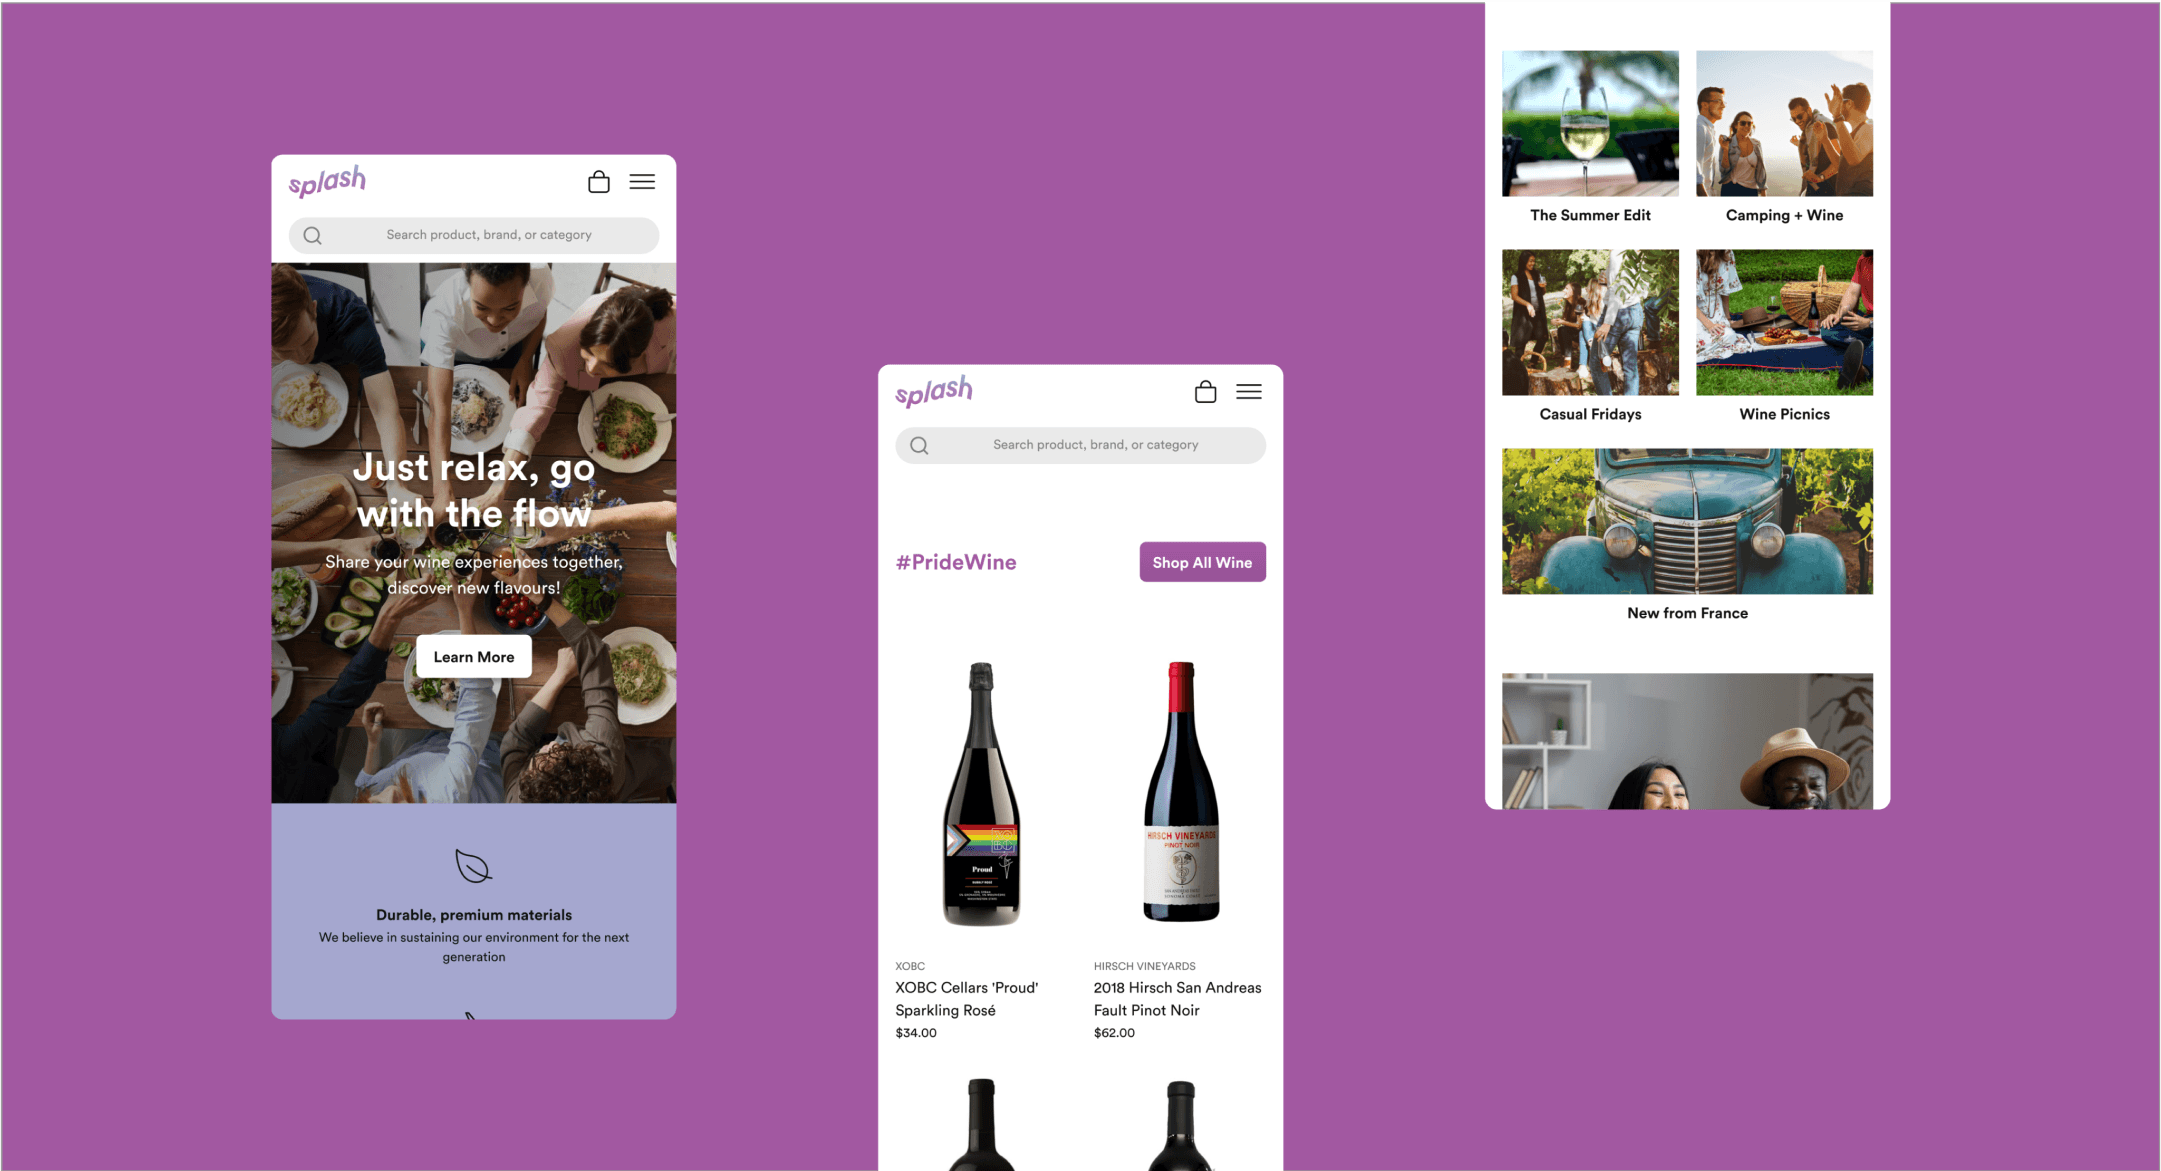 Three screenshots of Orium's Mobile Accelerator on the Splash wines mobile app.